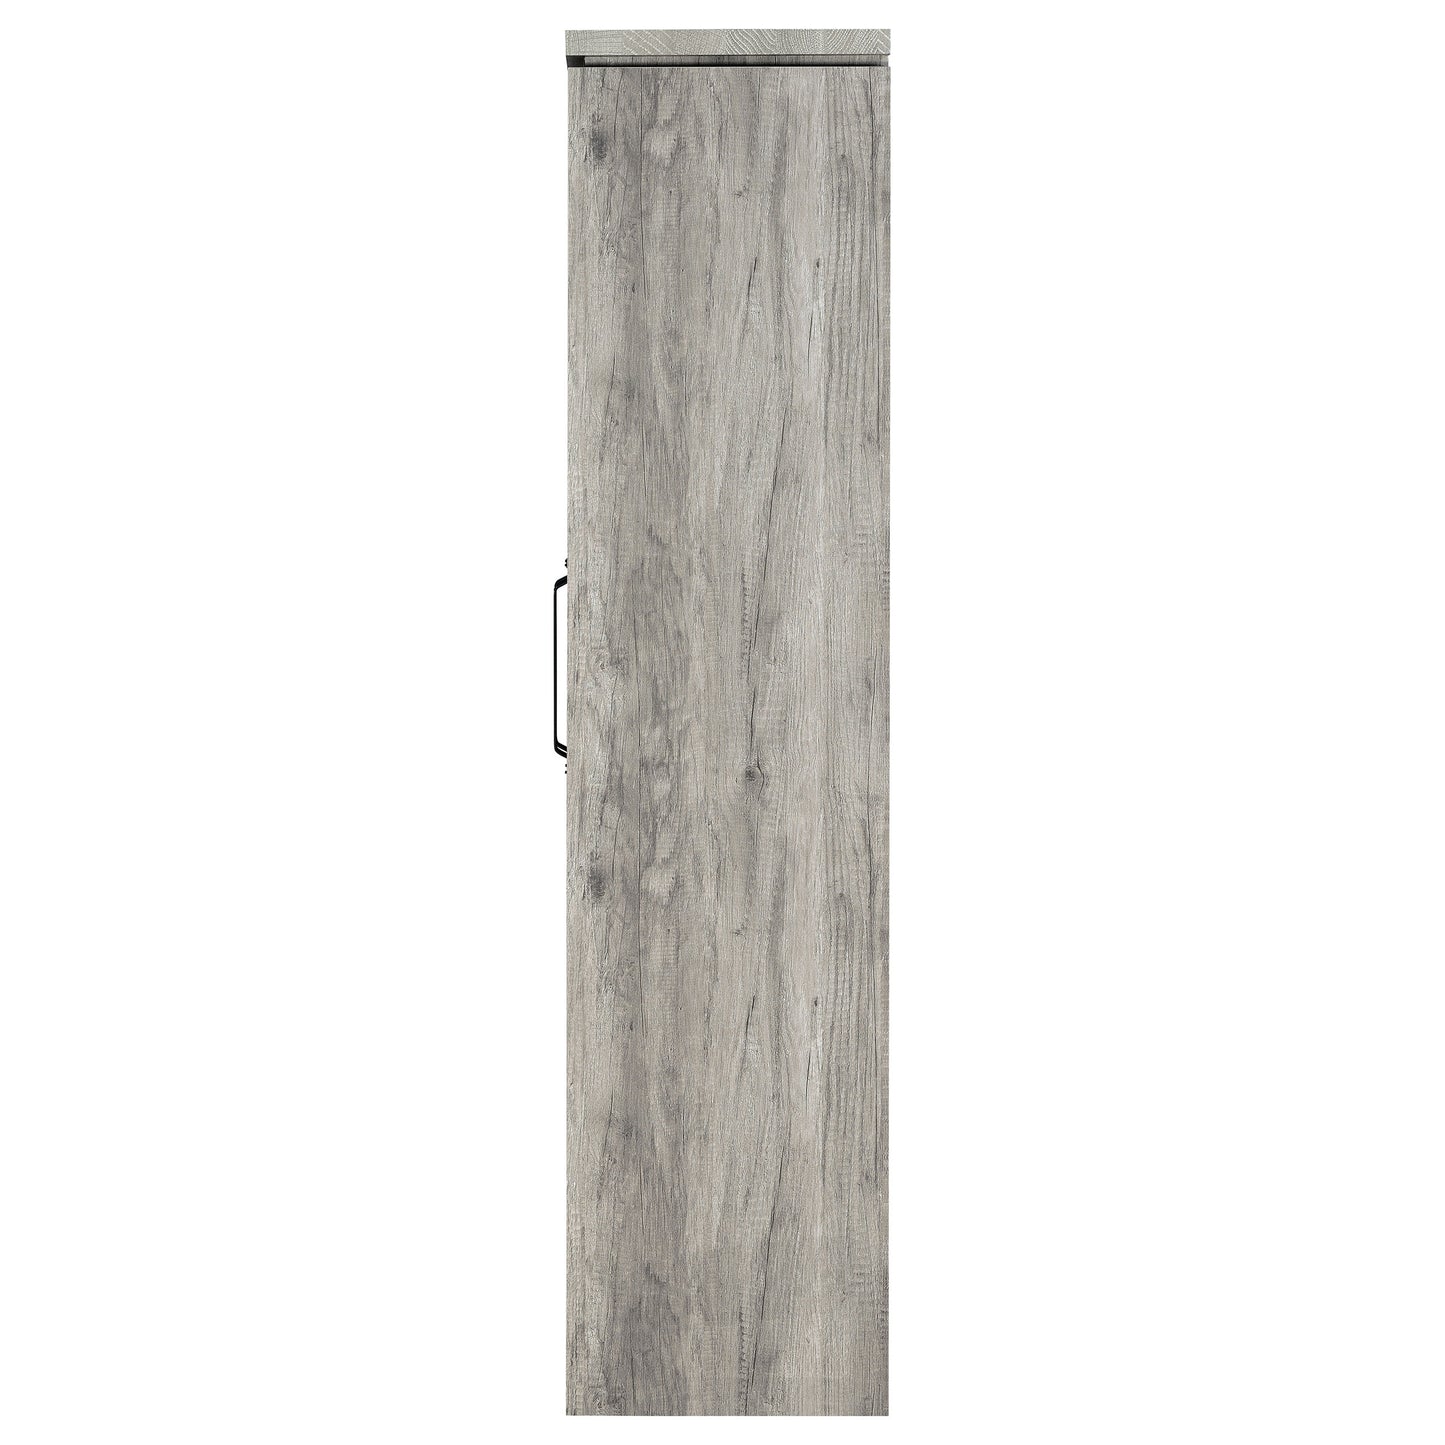 Alejo 2-door Tall Cabinet Grey Driftwood